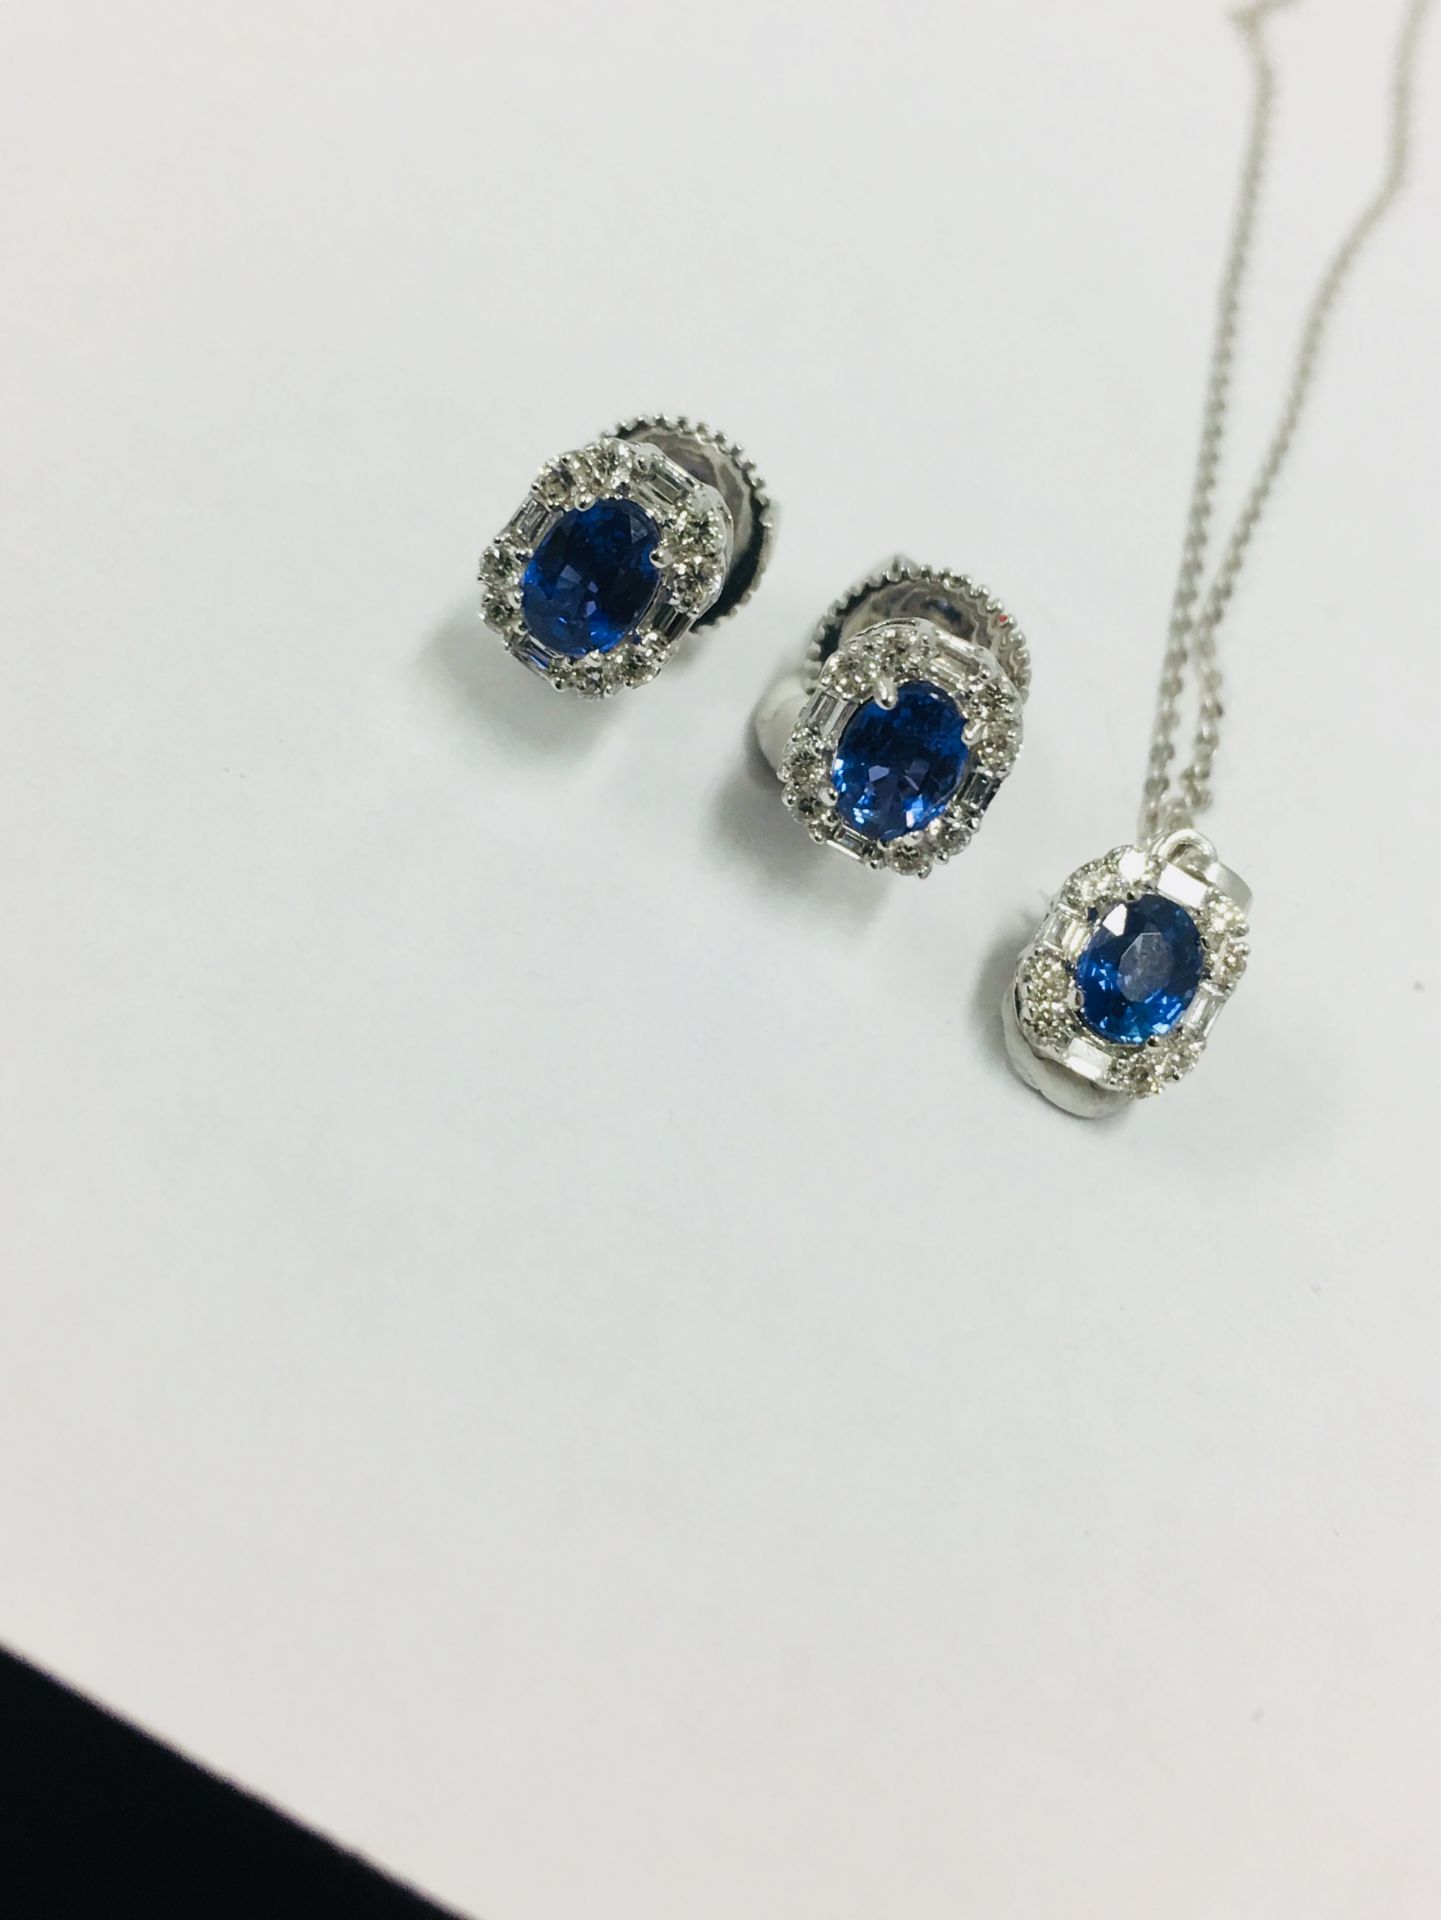 18ct Sapphire diamond Earrings and Pendant Set,0.78ct natural sapphire,0.24ct diamond brilliant - Image 3 of 5